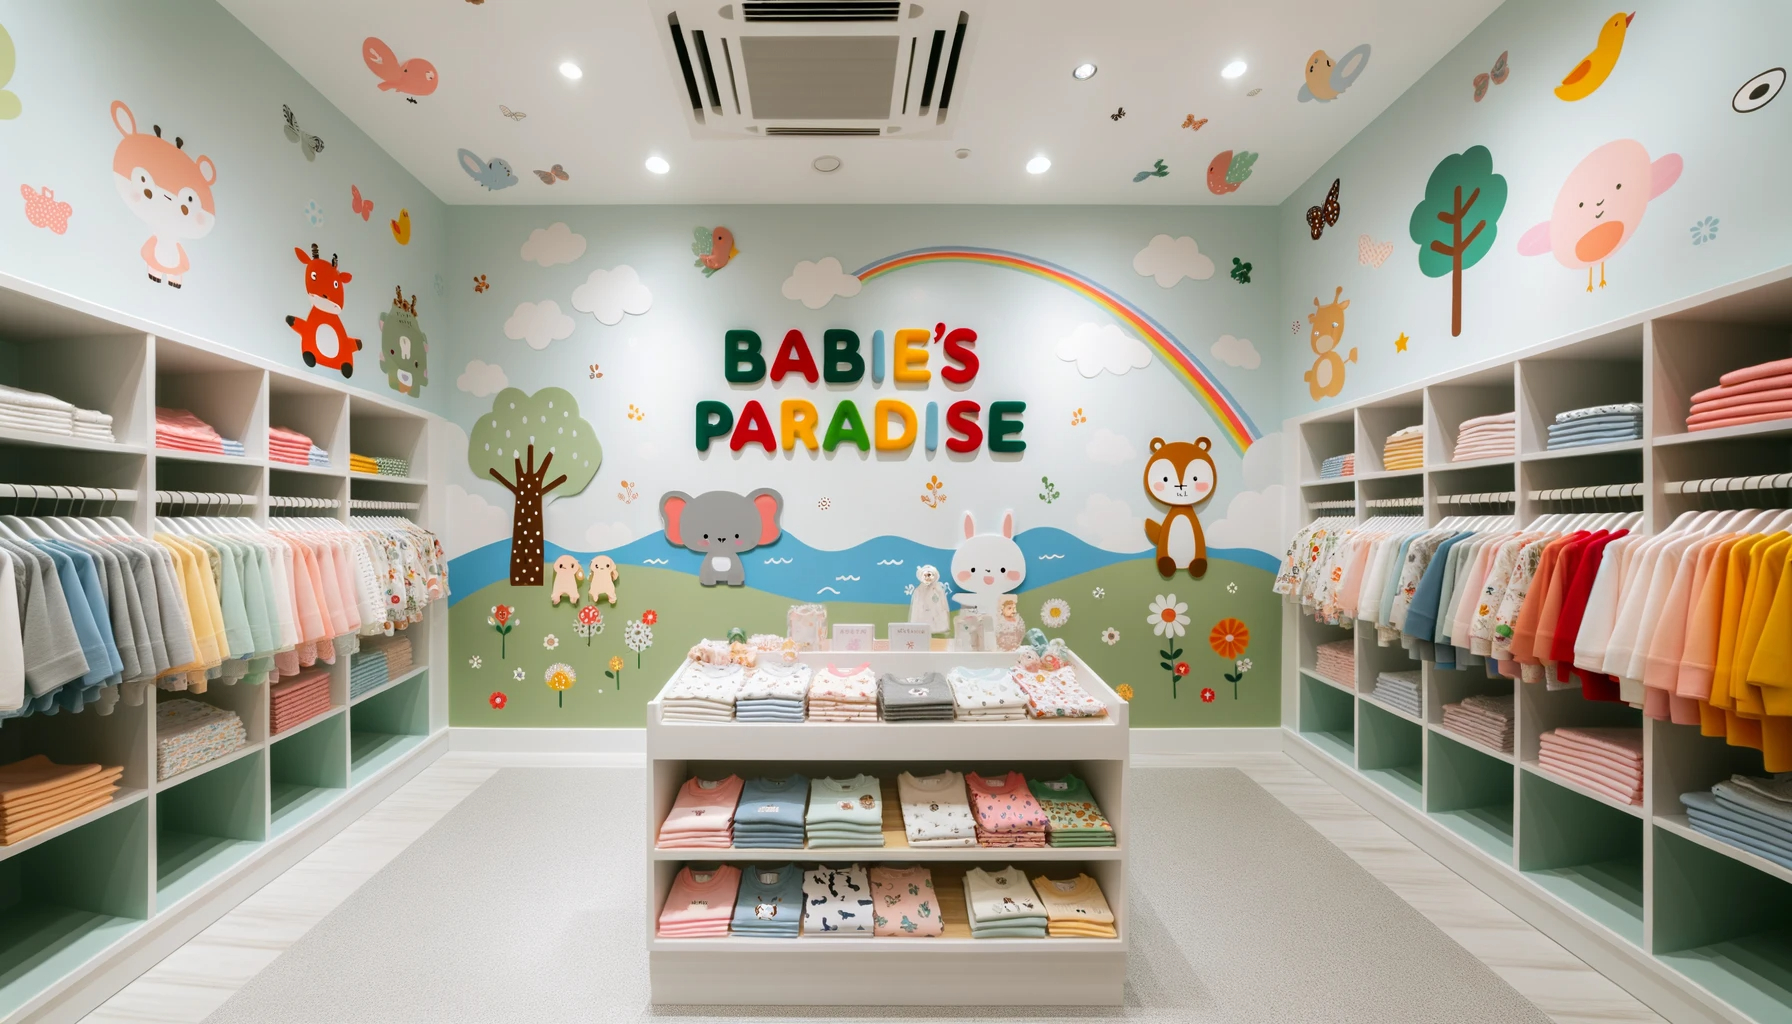 Babies Paradise Poster Image